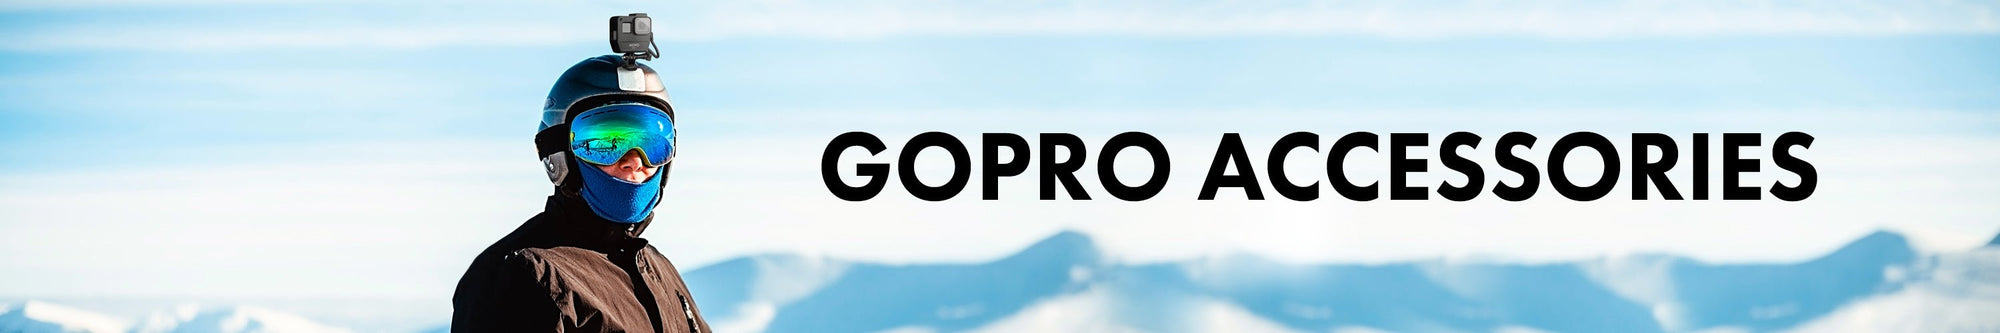 GoPro Accessories & Kits